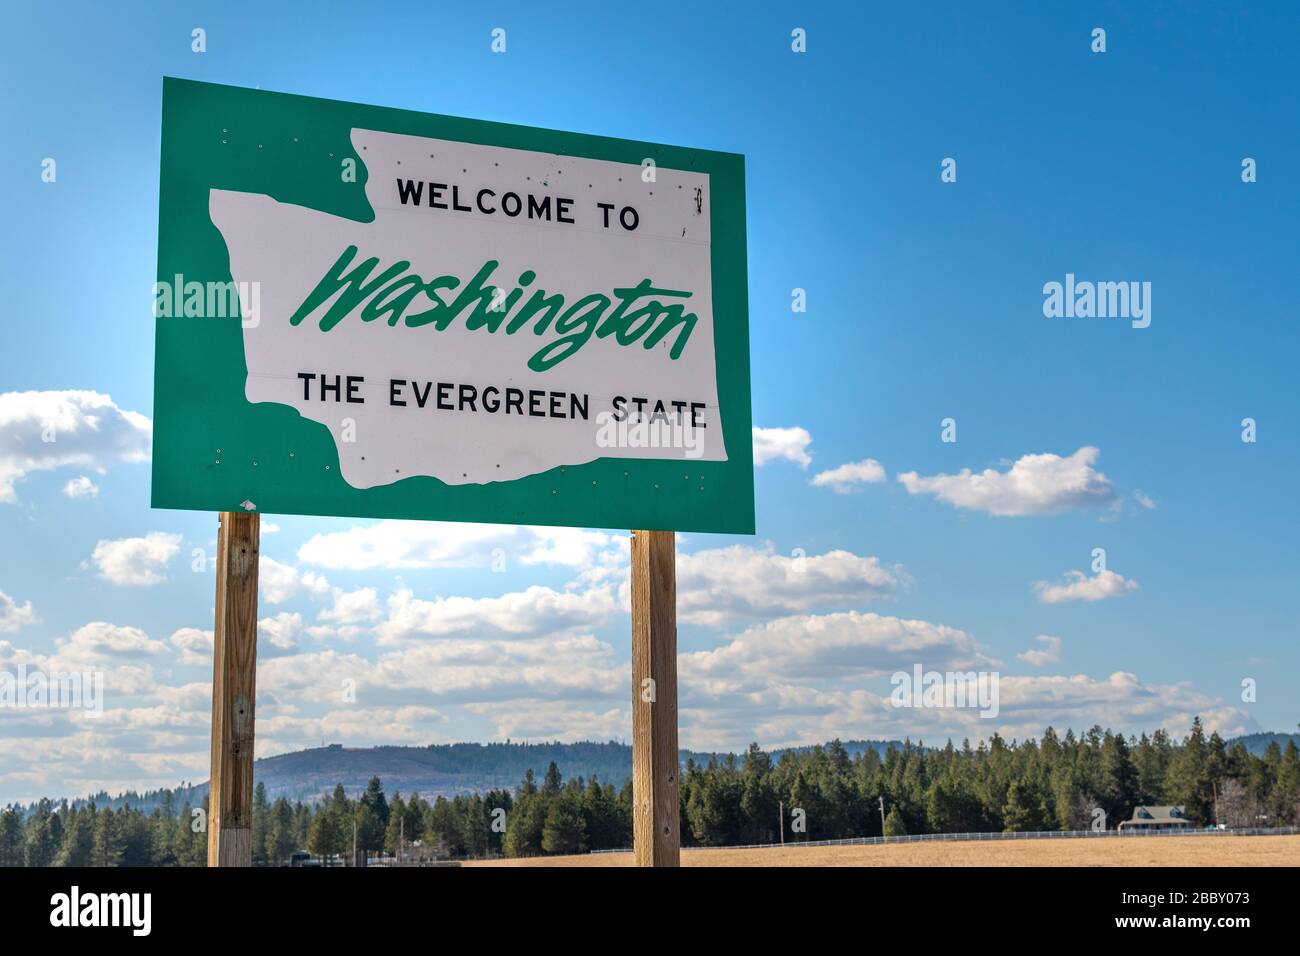 A roadside welcome to Washington The Evergreen State sign in Spokane, Washington, USA. Stock Photo